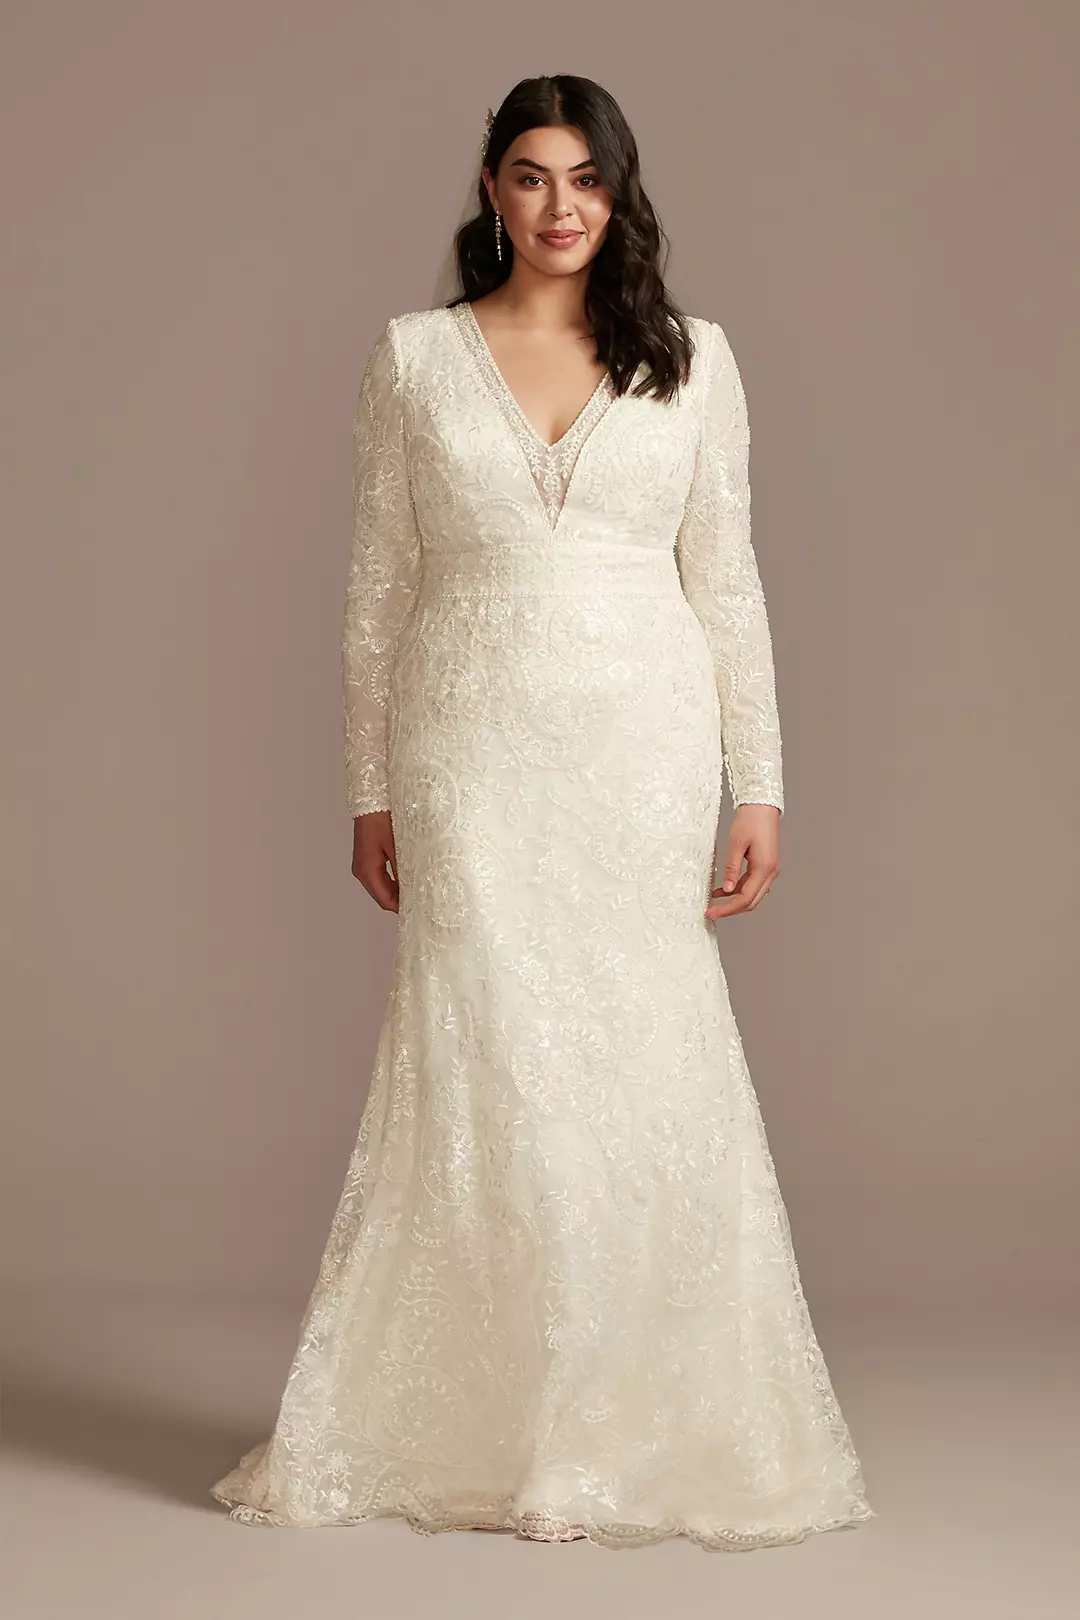 Sequin Embellished Wedding Dress with Scallop Hem Image 1